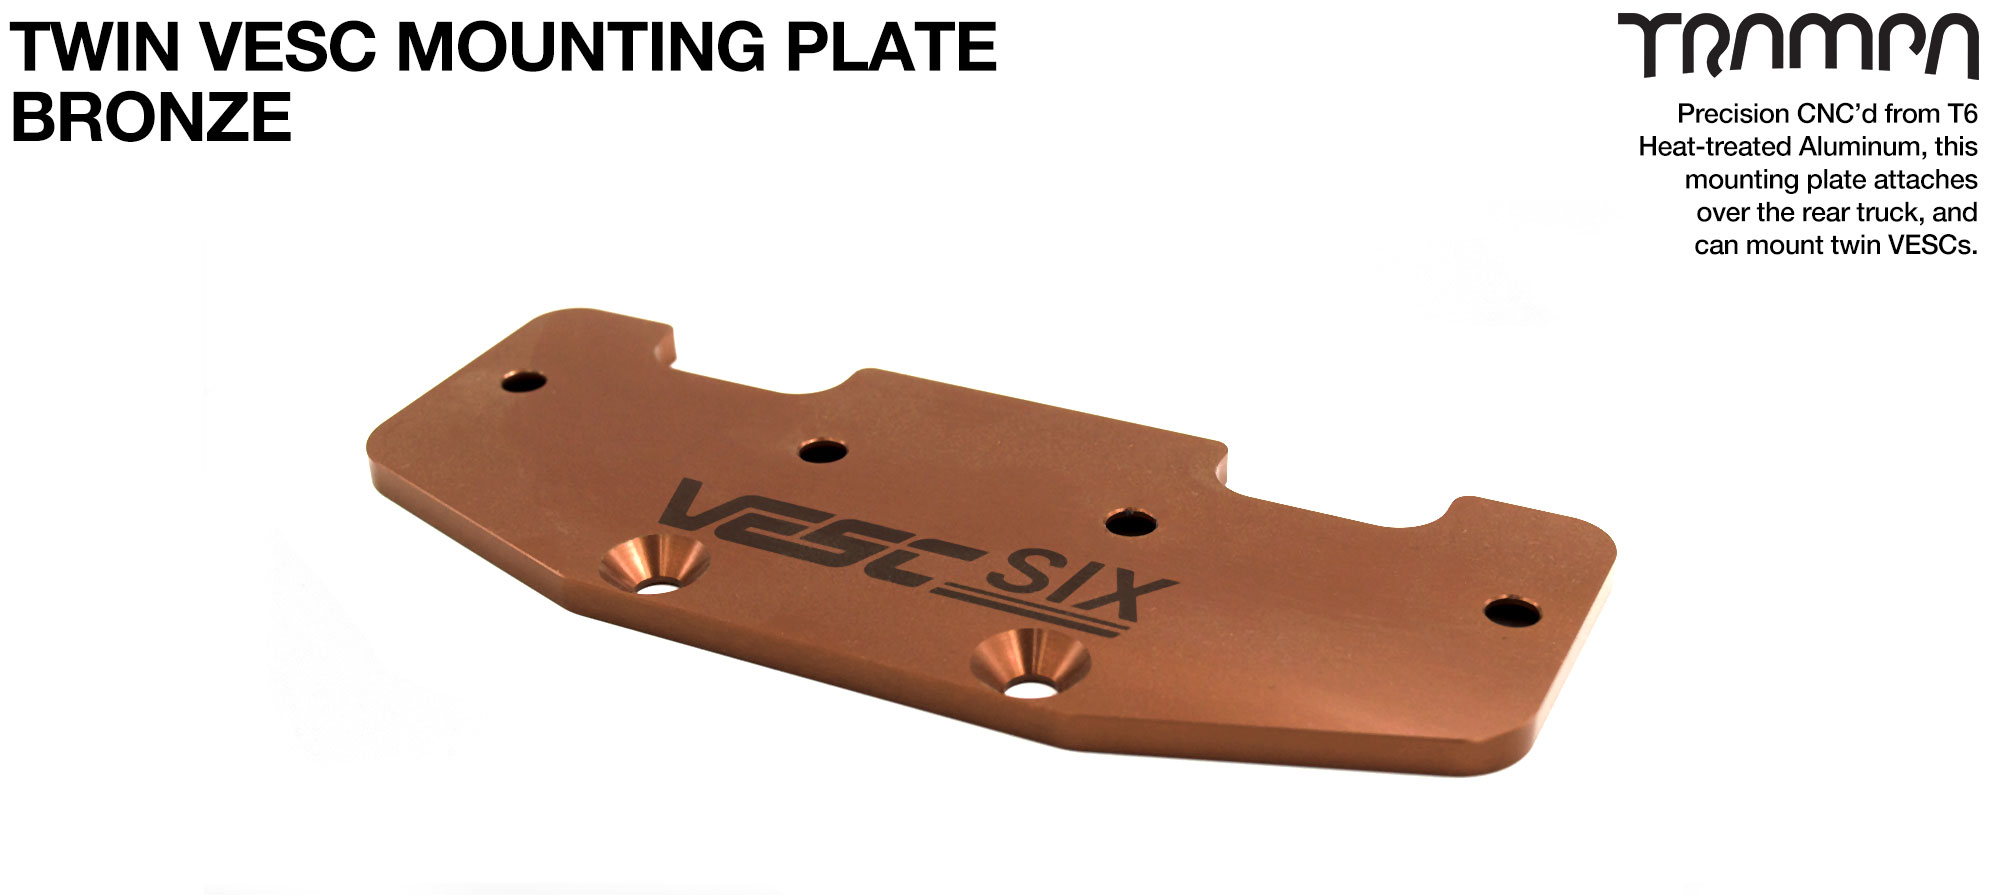 ALUMINIUM mounting Plate for TWIN VESC 6 - Anodised BRONZE 